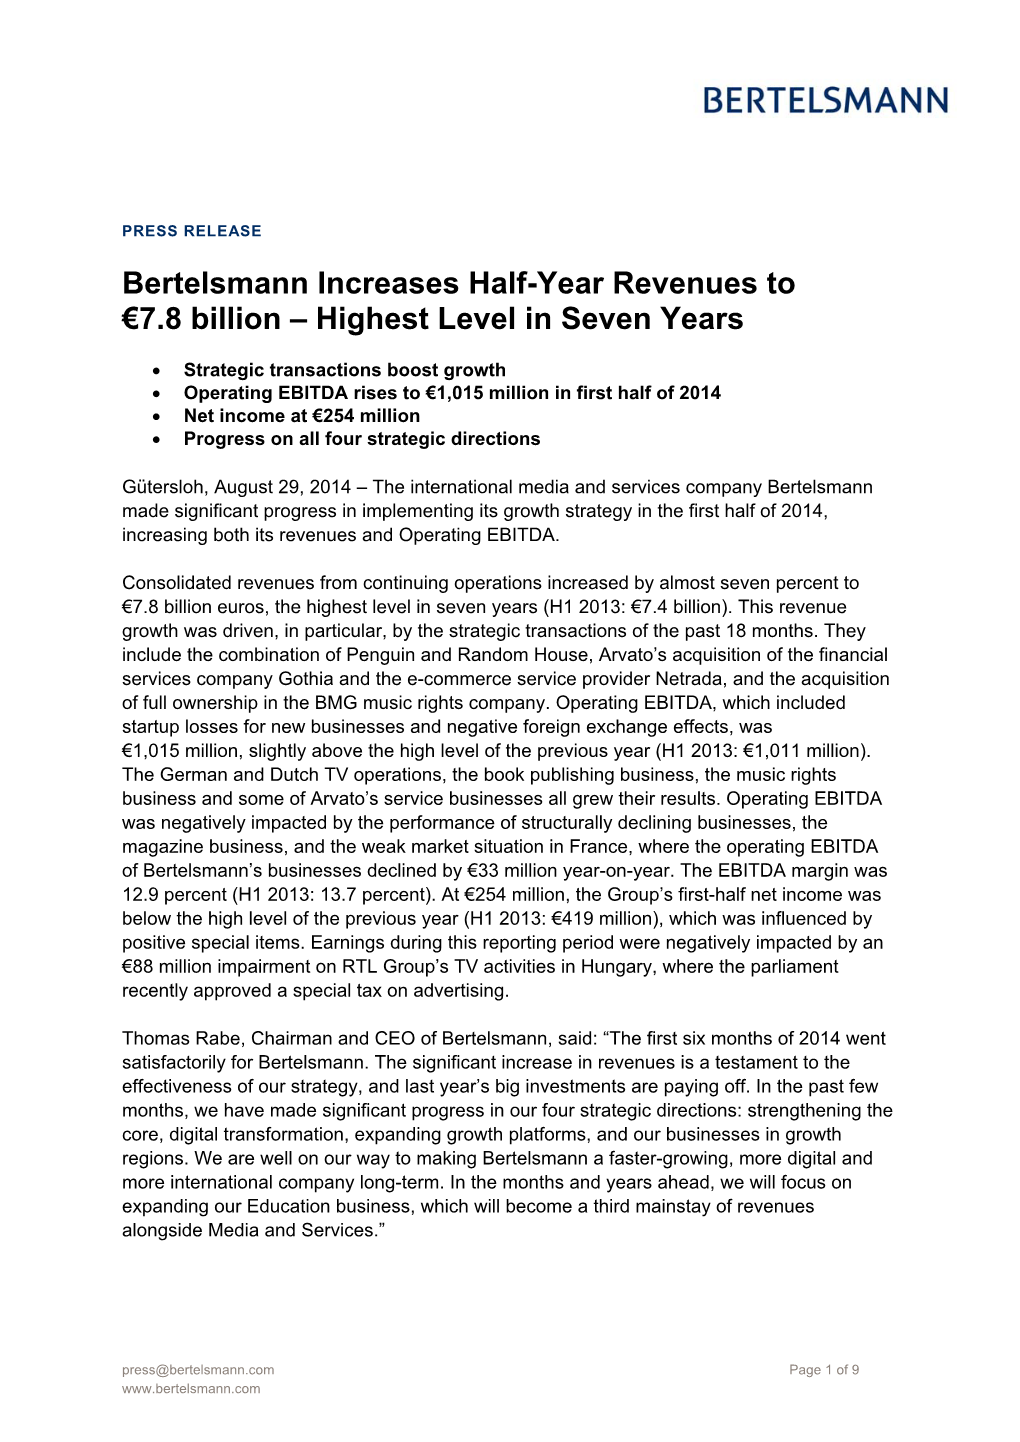 Bertelsmann Increases Half-Year Revenues to €7.8 Billion – Highest Level in Seven Years